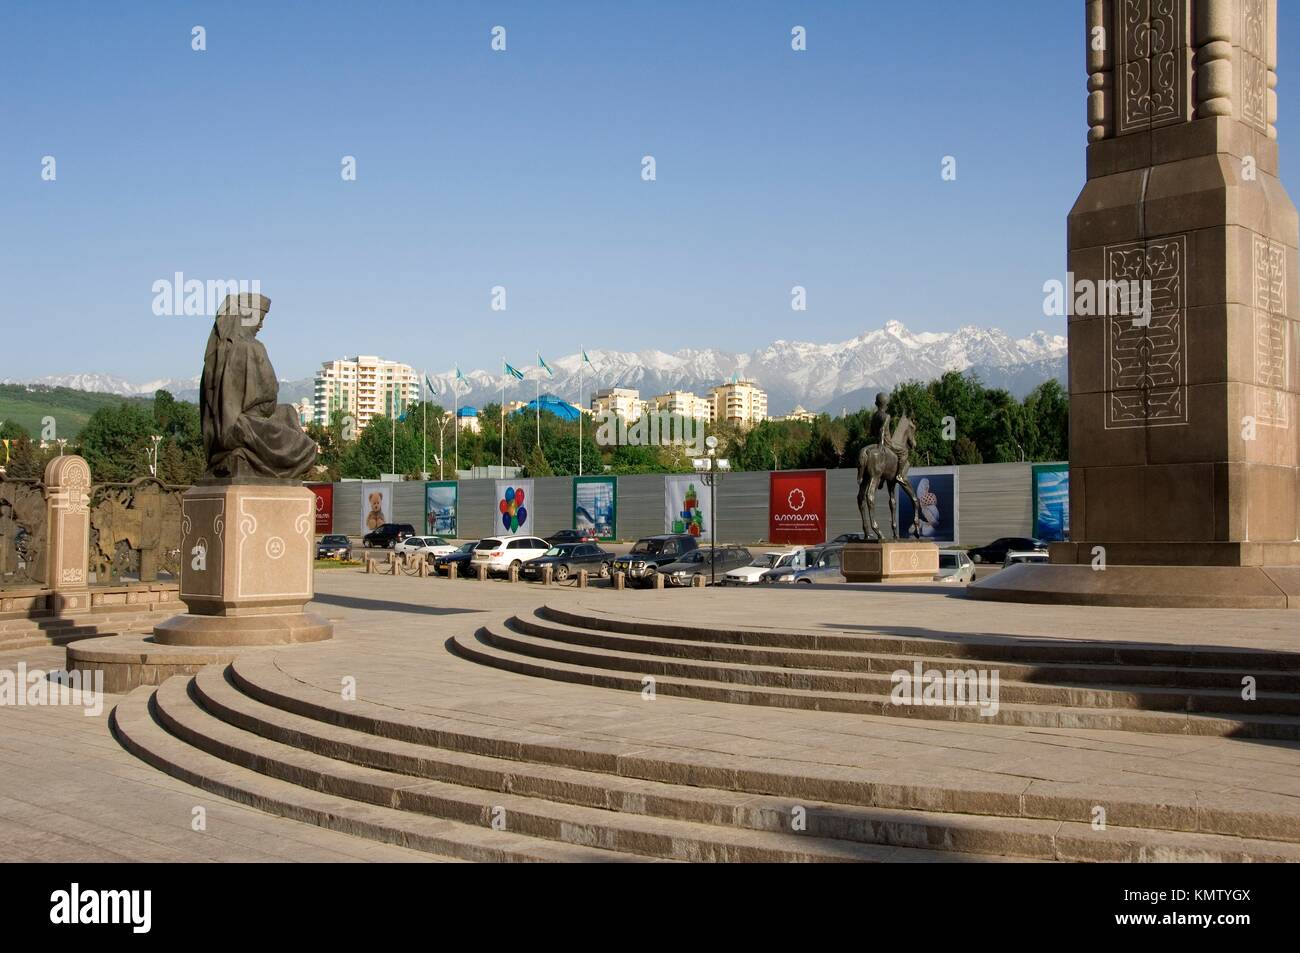 La plaza de la independencia, Almaty, Kazajstán Foto de stock